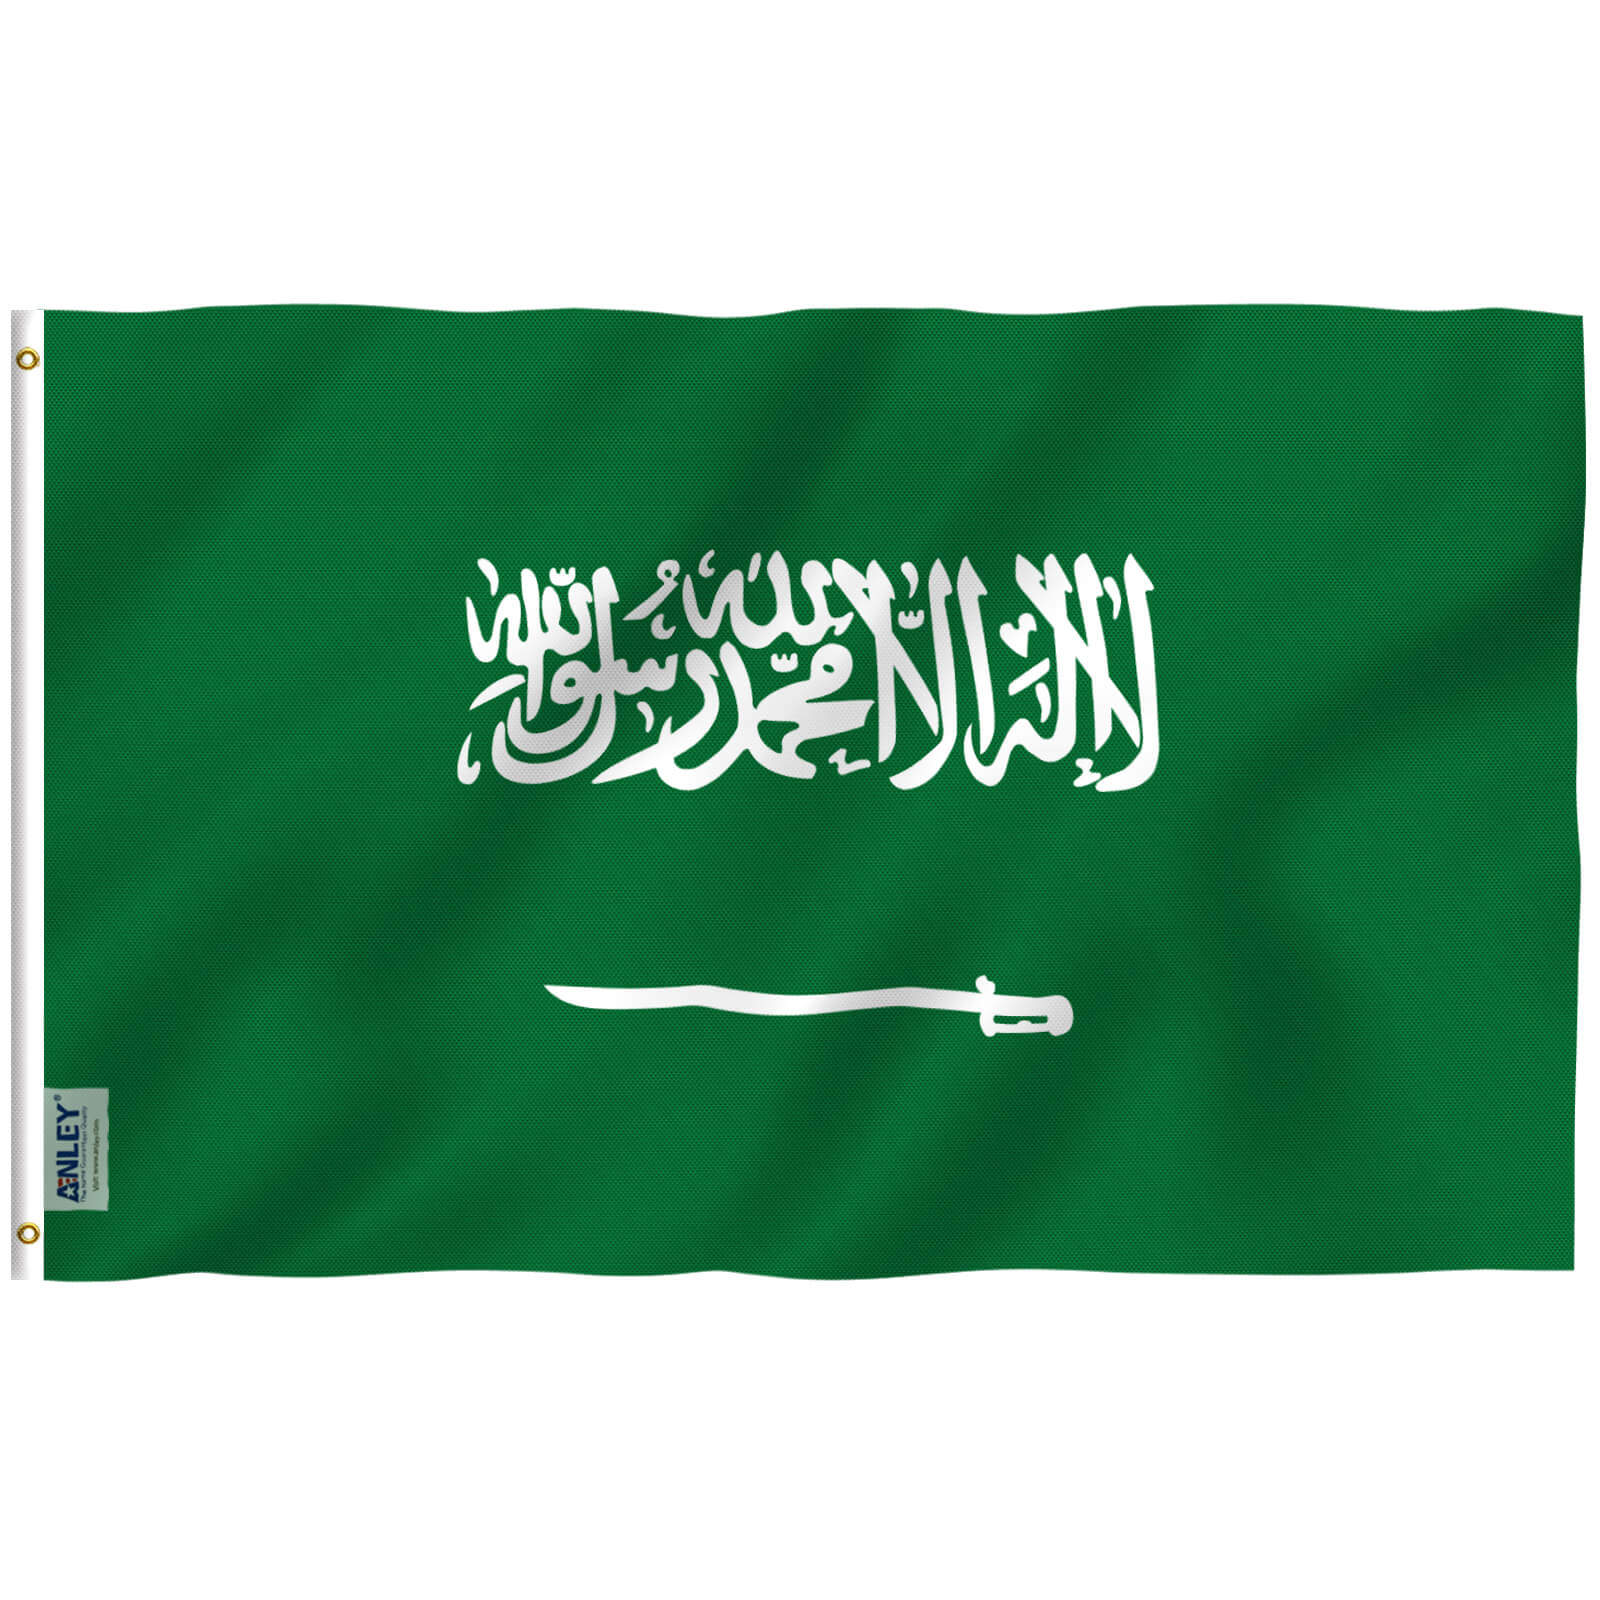 Fly Breeze Saudi Arabia Flag 3x5 Foot - Anley Flags